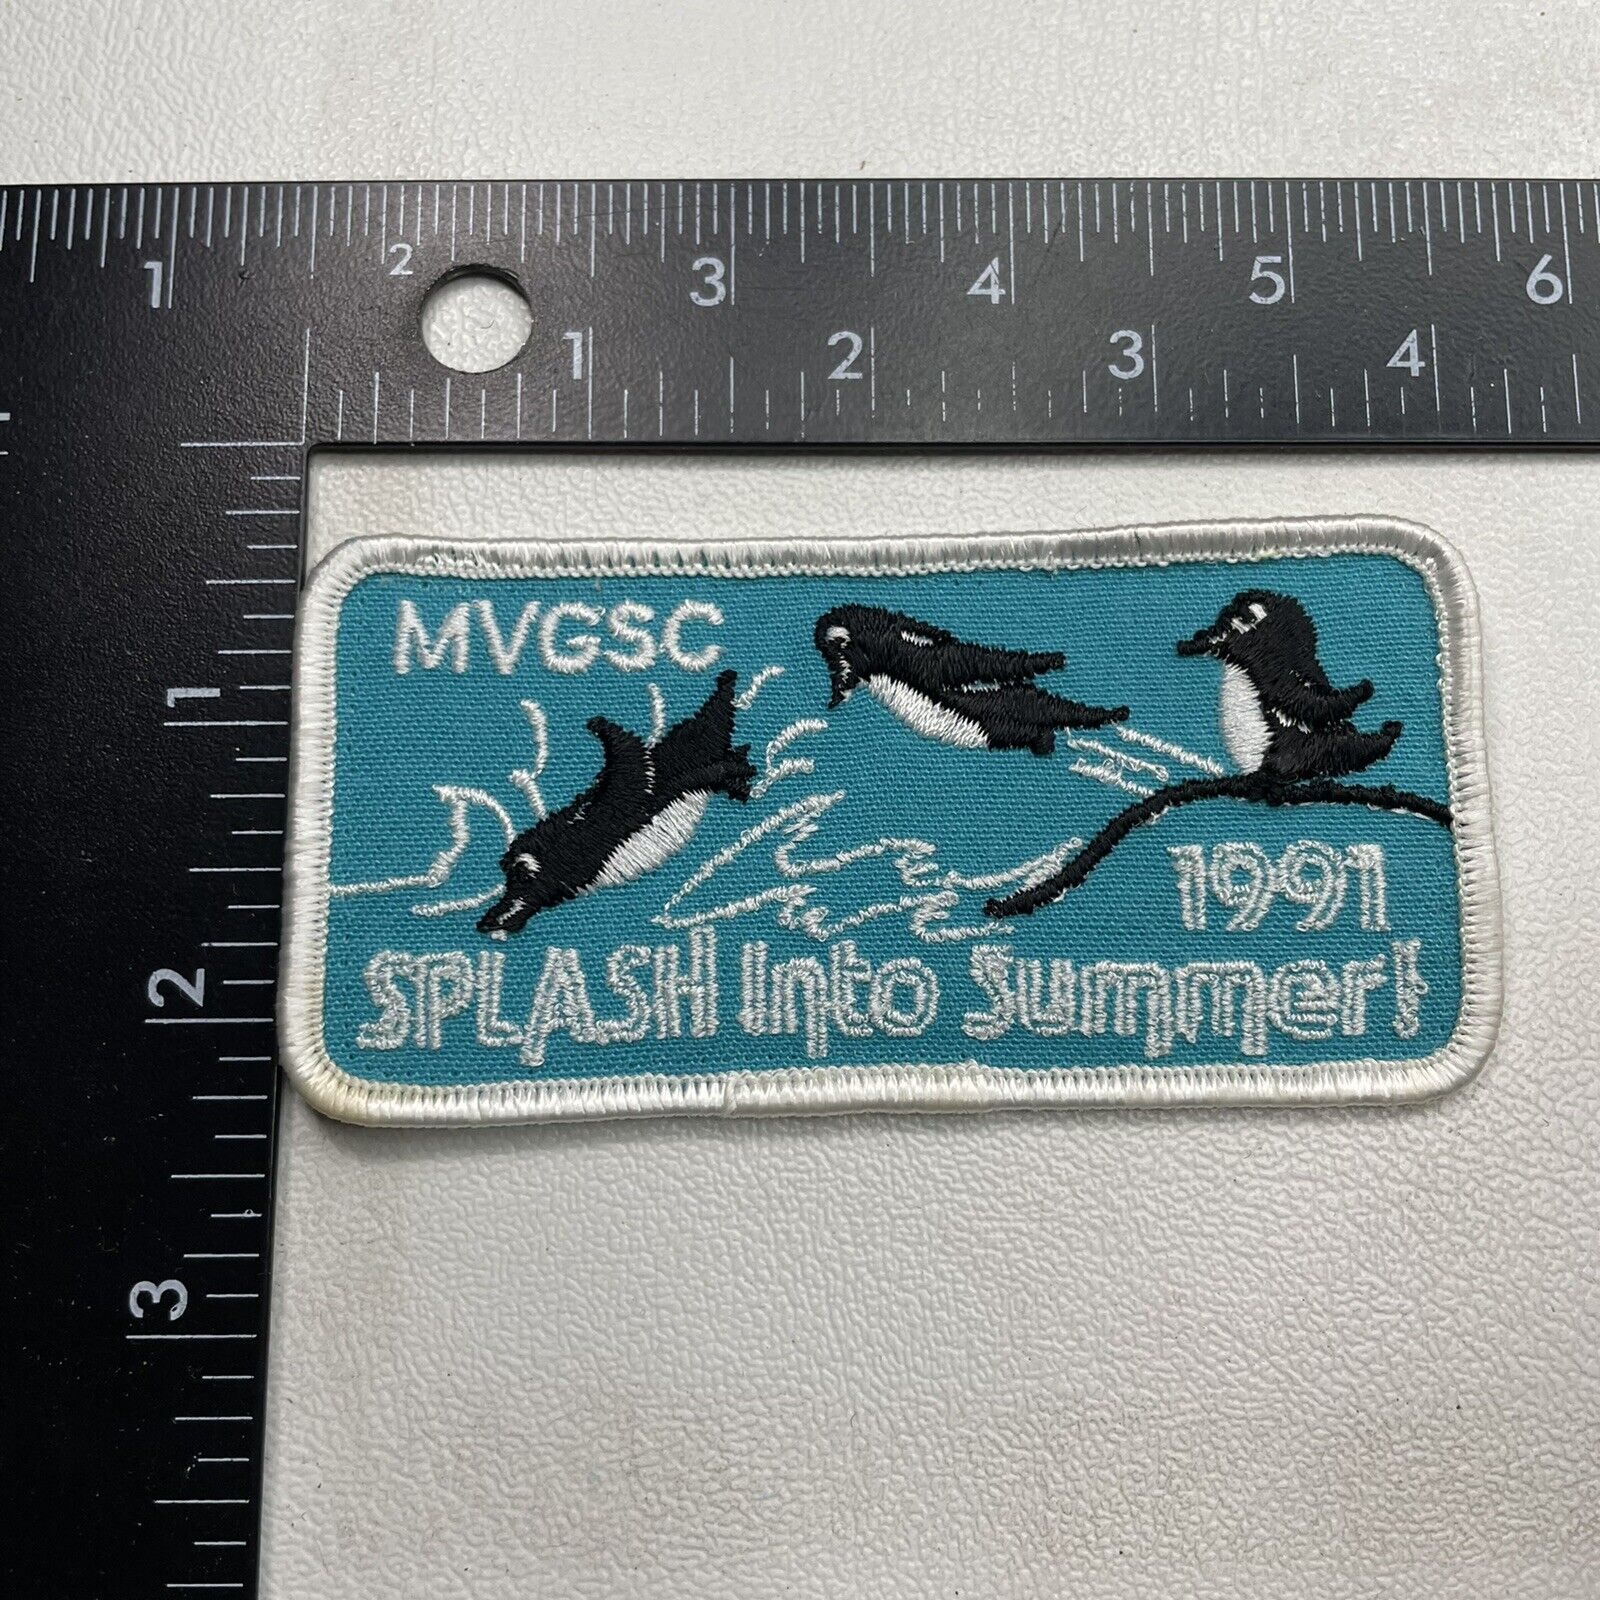 Girl Scouts MVGSC SPLASH INTO SUMMER 1991 Penguin Patch 20R3